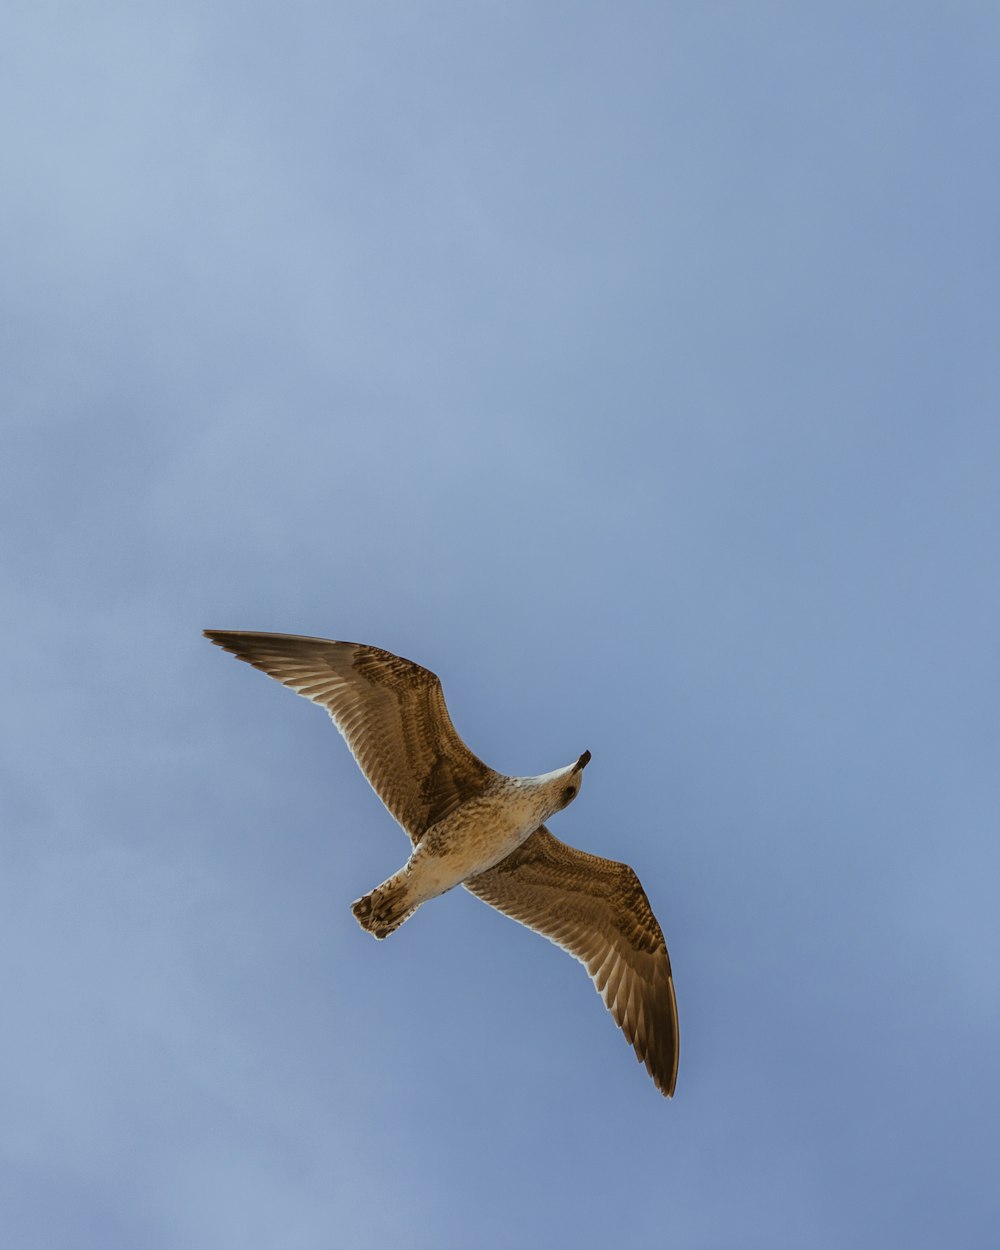 brown bird in flight under blue sky